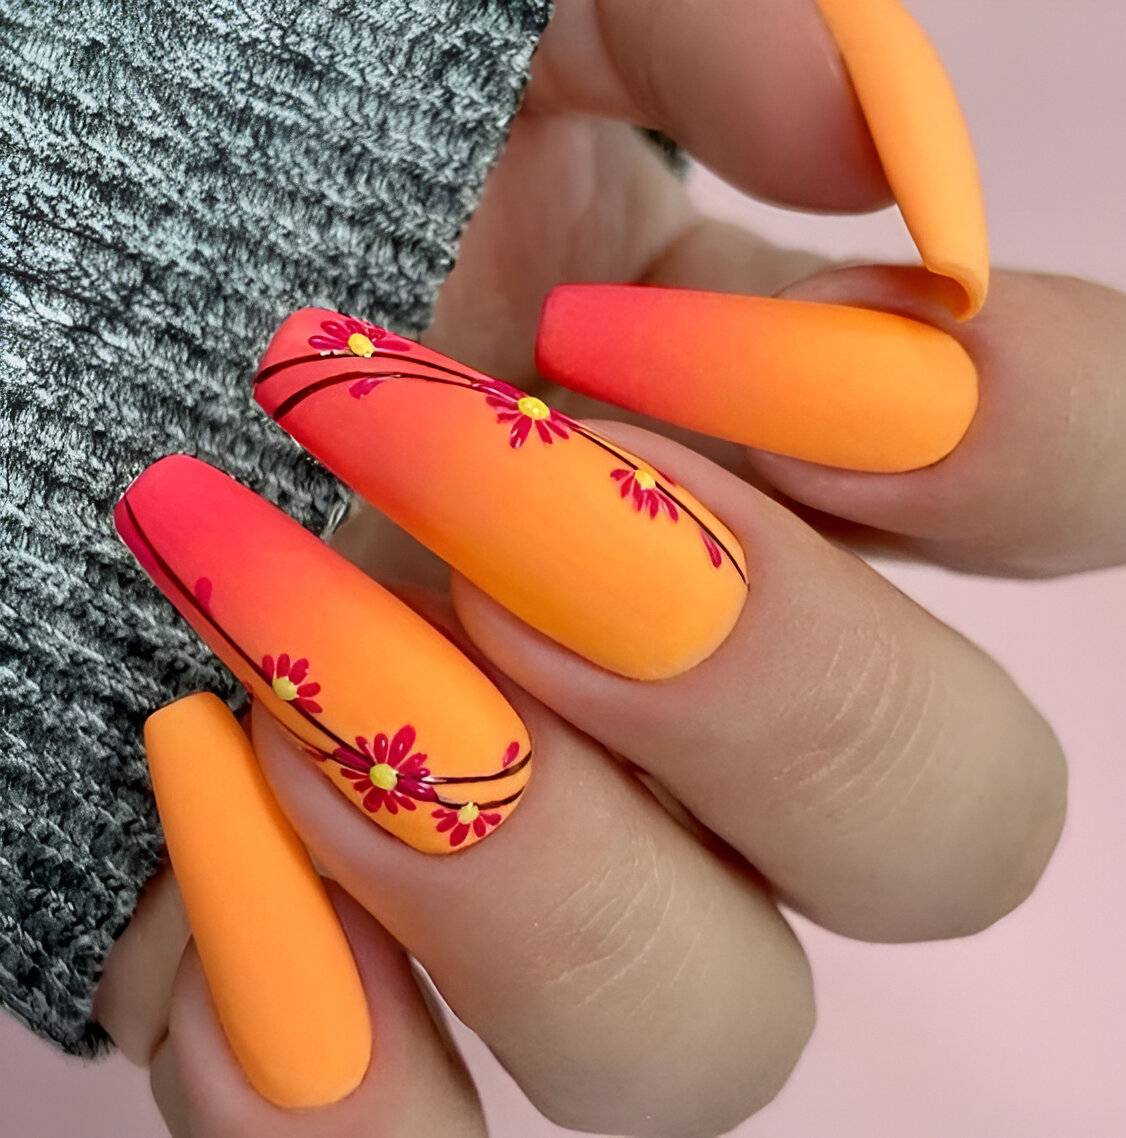 30 Chic Orange Nail Ideas To Make You Look Stunning - 219